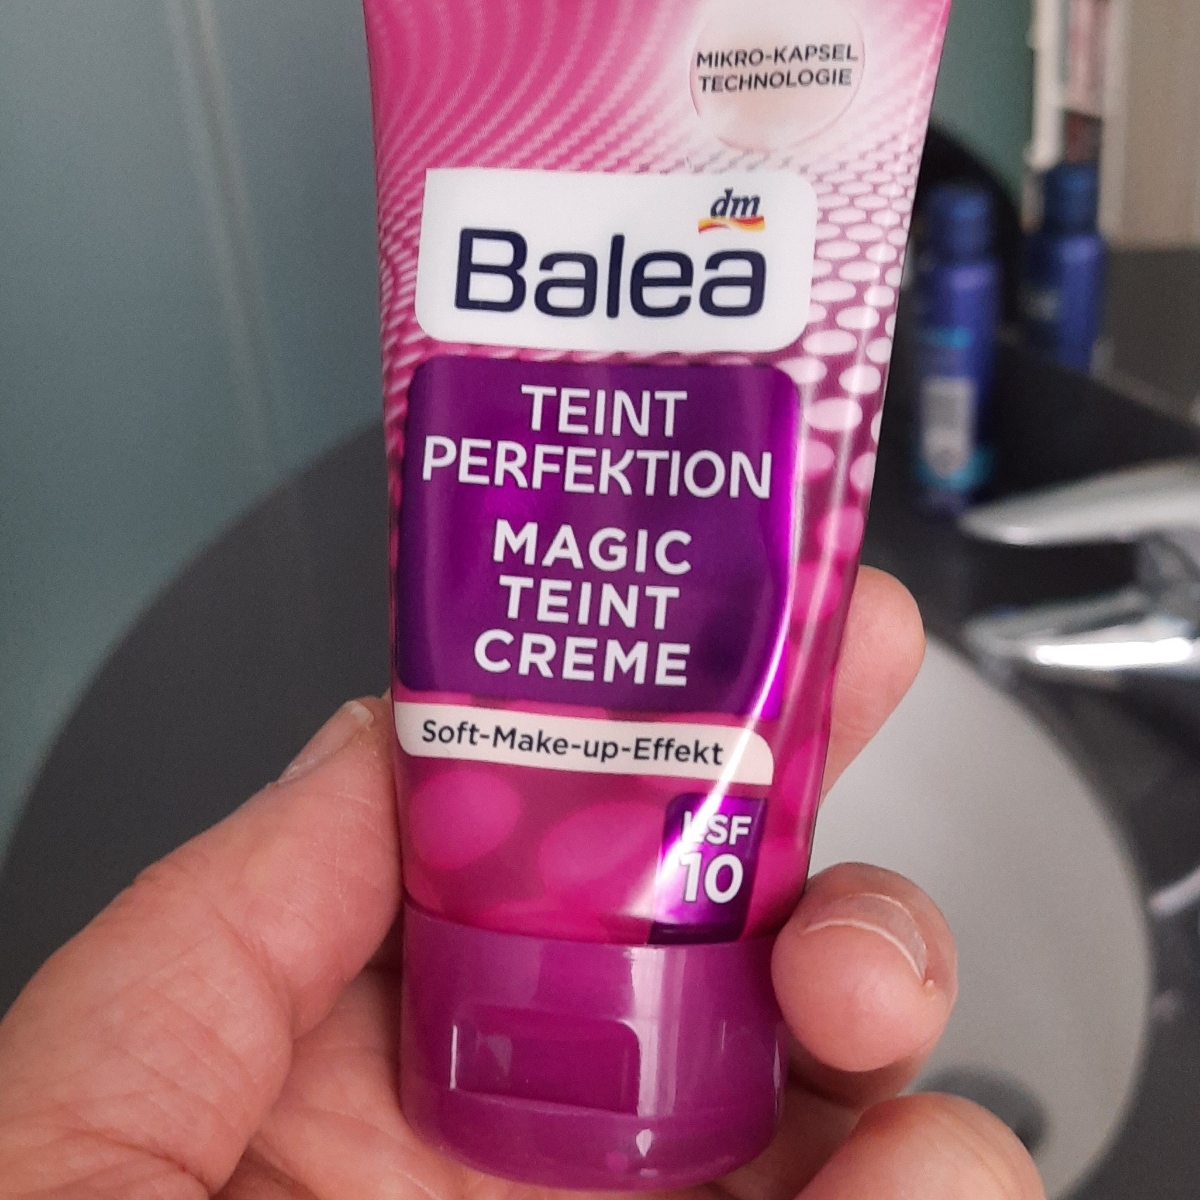 Balea Teint Perfektion Magic Teint Creme Review | abillion